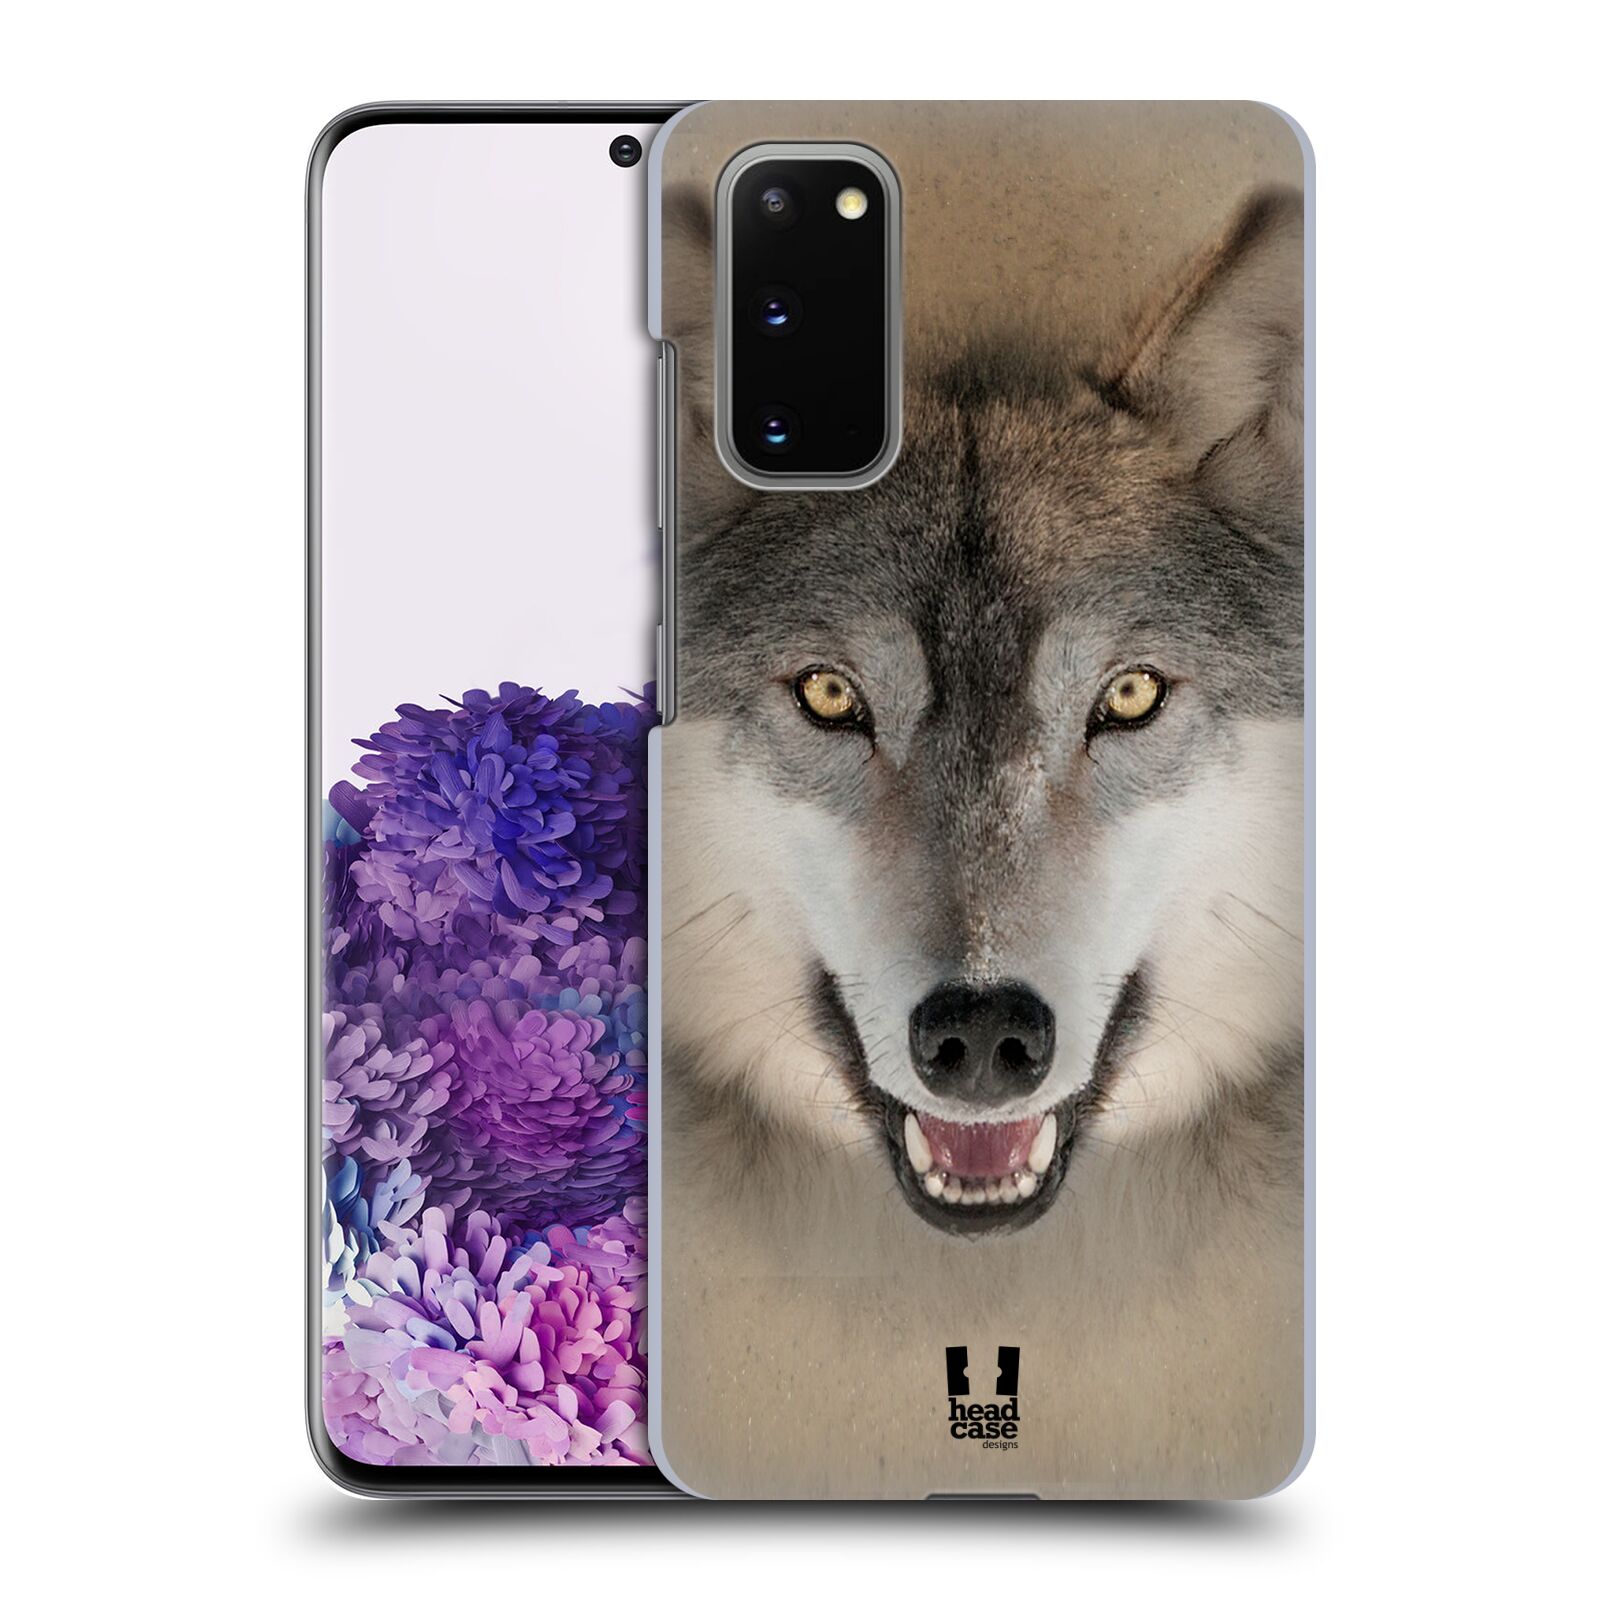 Pouzdro na mobil Samsung Galaxy S20 - HEAD CASE - vzor Zvířecí tváře 2 vlk šedý